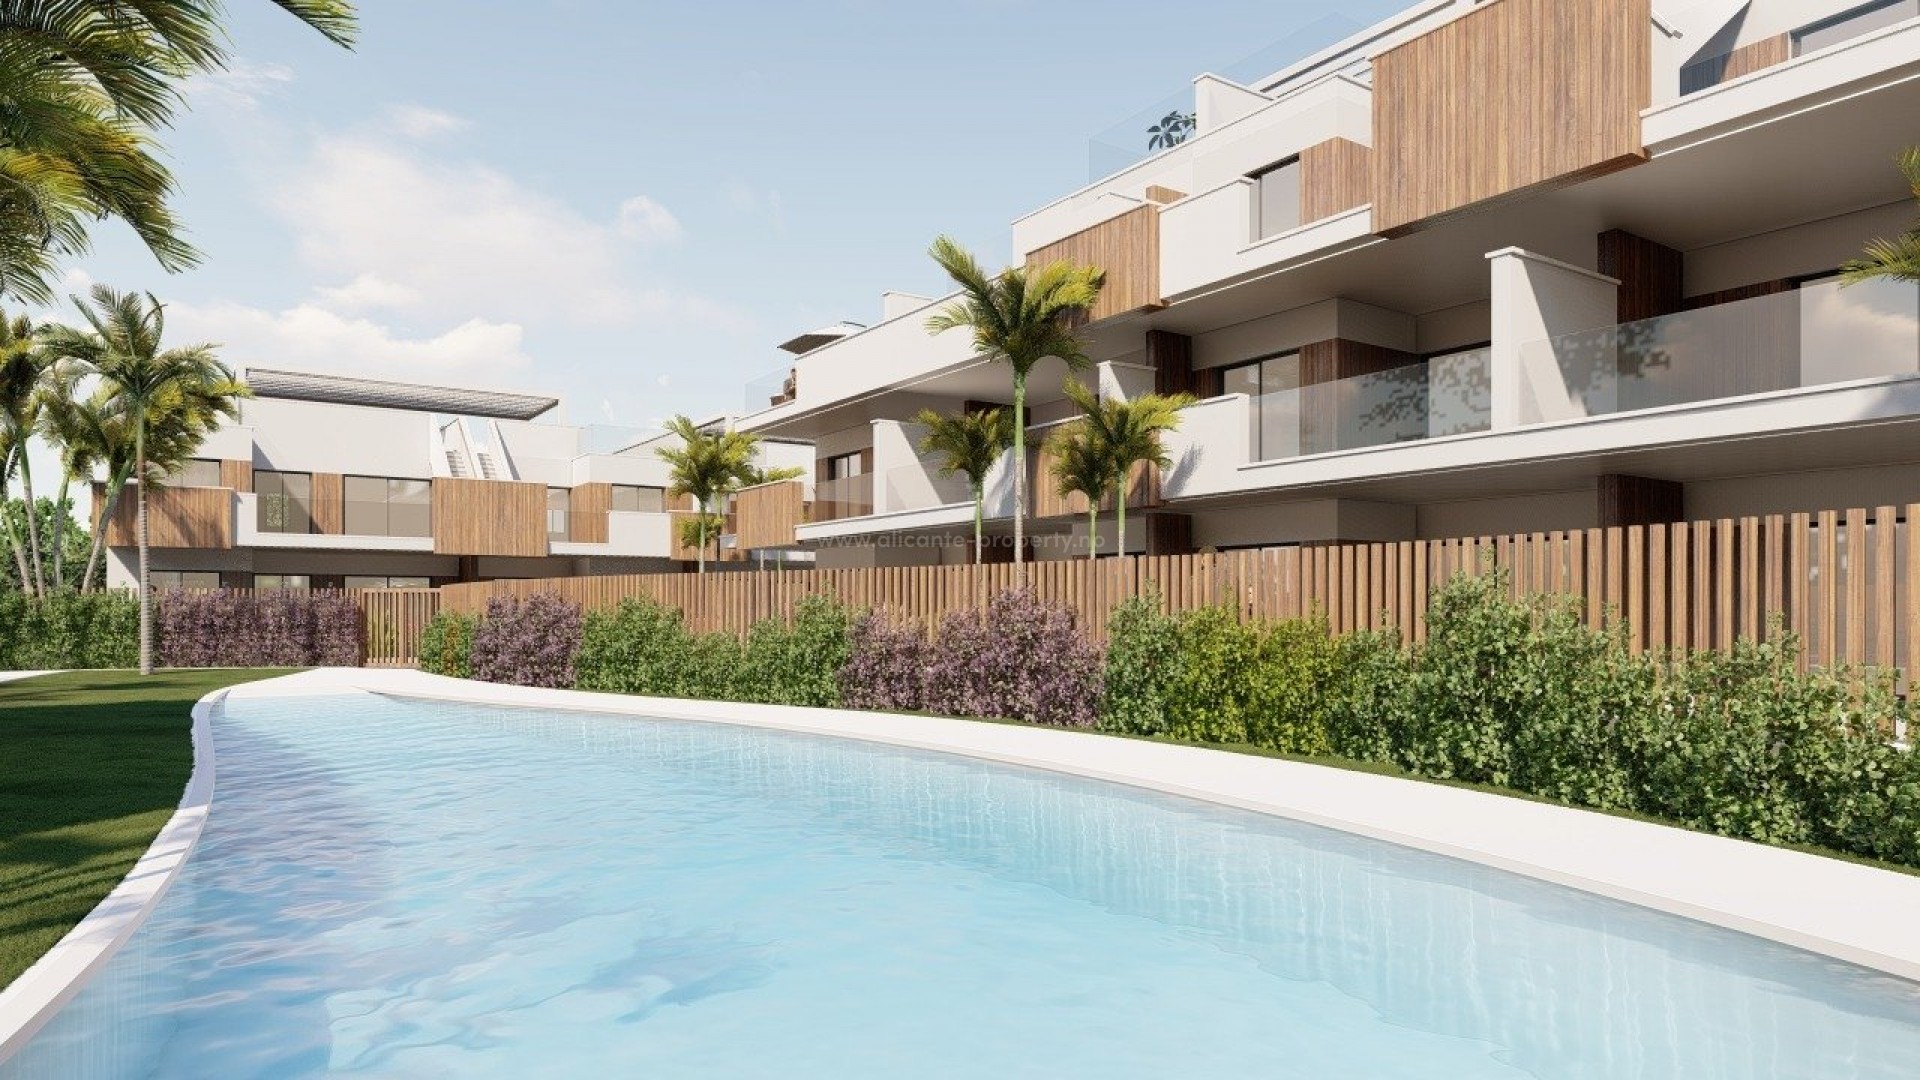 New residential complex in Pilar de La Horadada, 2/3 bedrooms, garden or terrace or solarium. Each property has garage spaces and stalls in the basement.